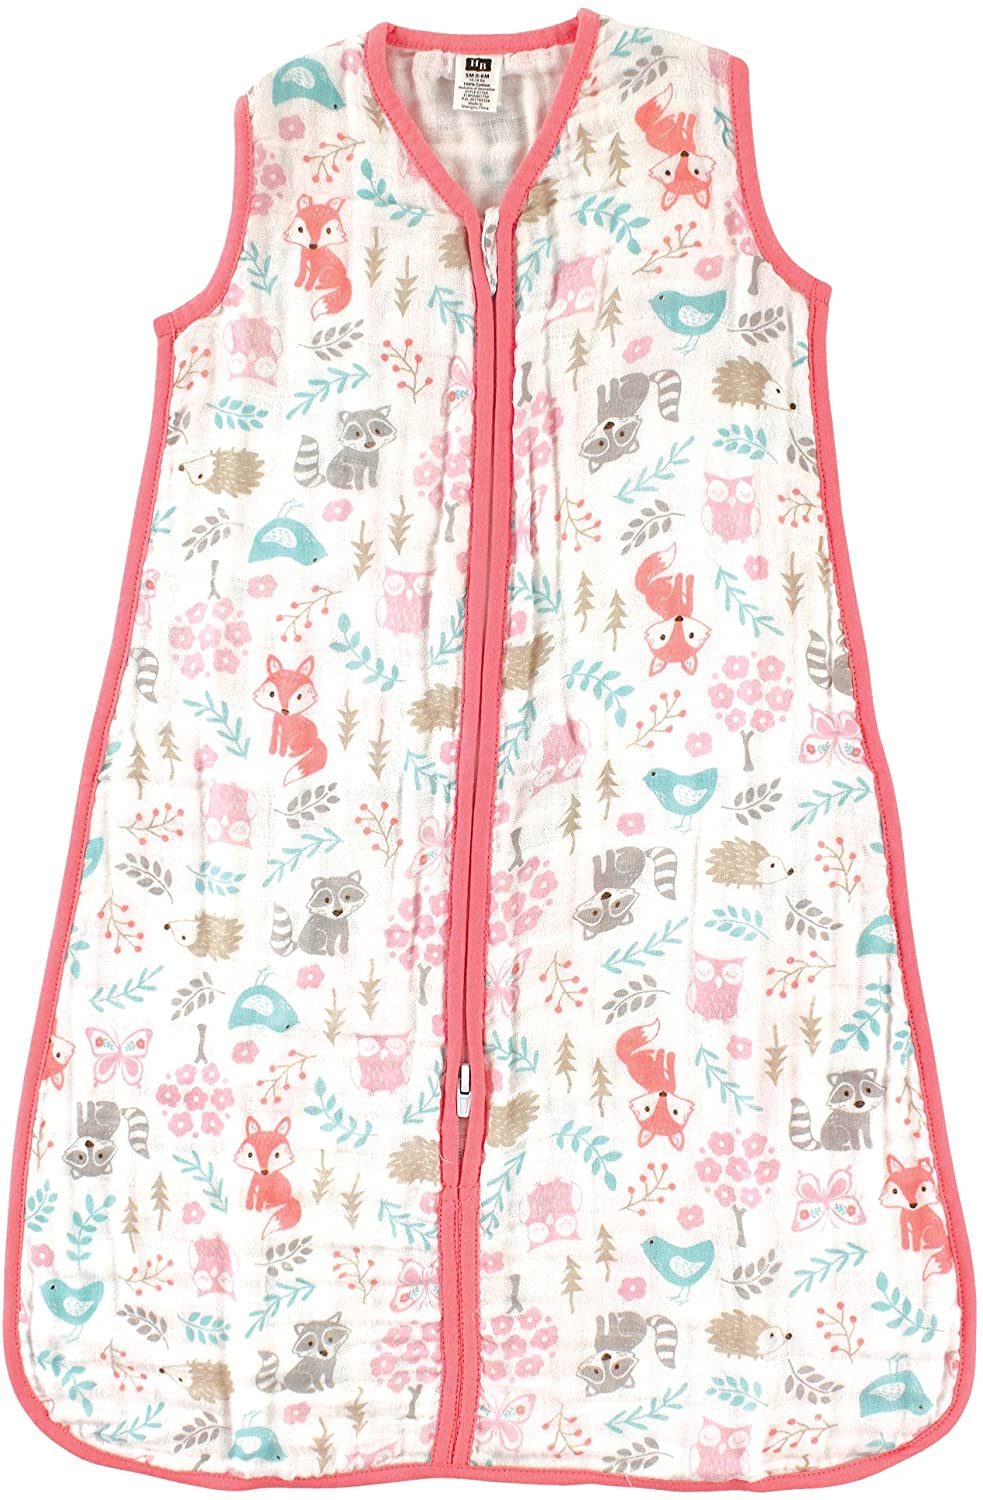 Hudson Baby Unisex Muslin Cotton Sleeveless Wearable Sleeping Bag, Sack, Blanket